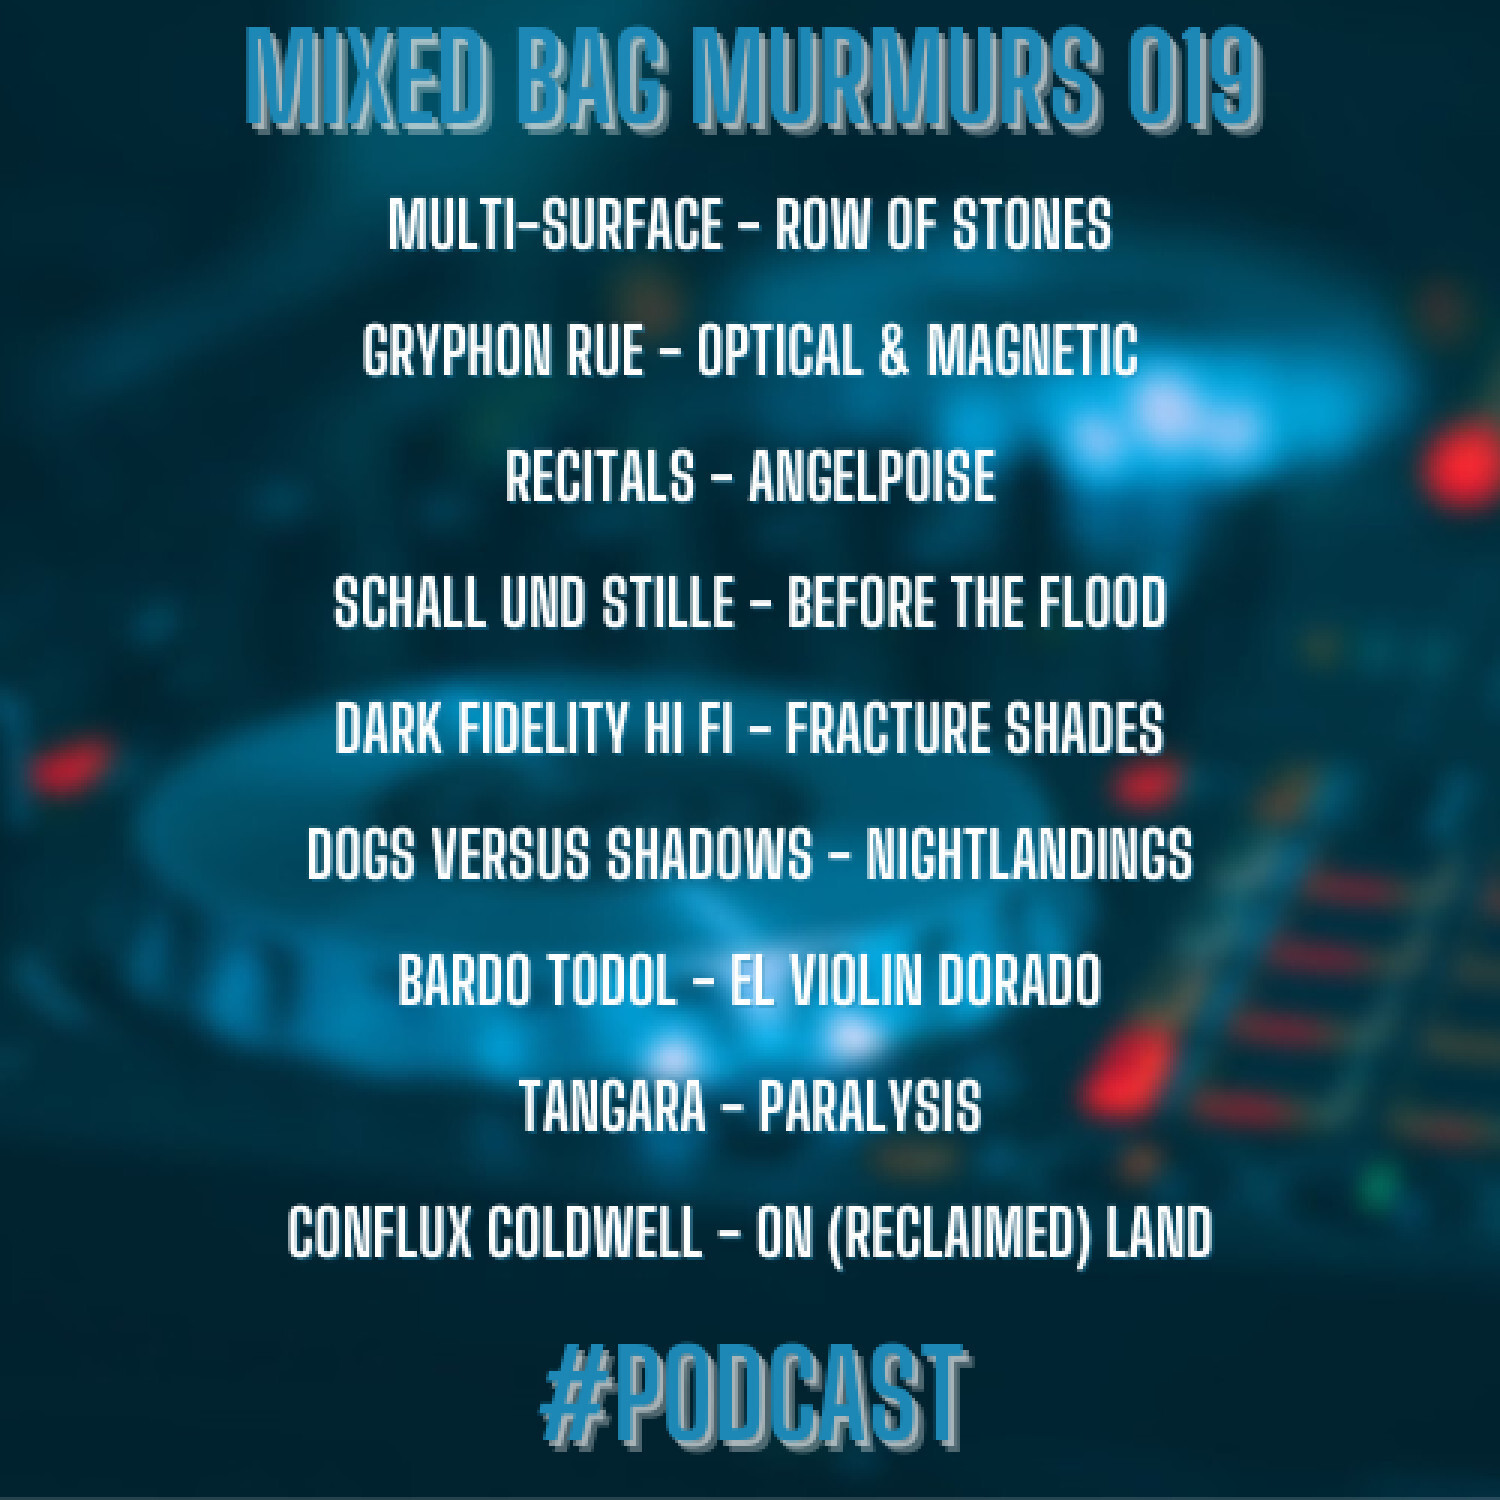 Mixed Bag Murmurs #019